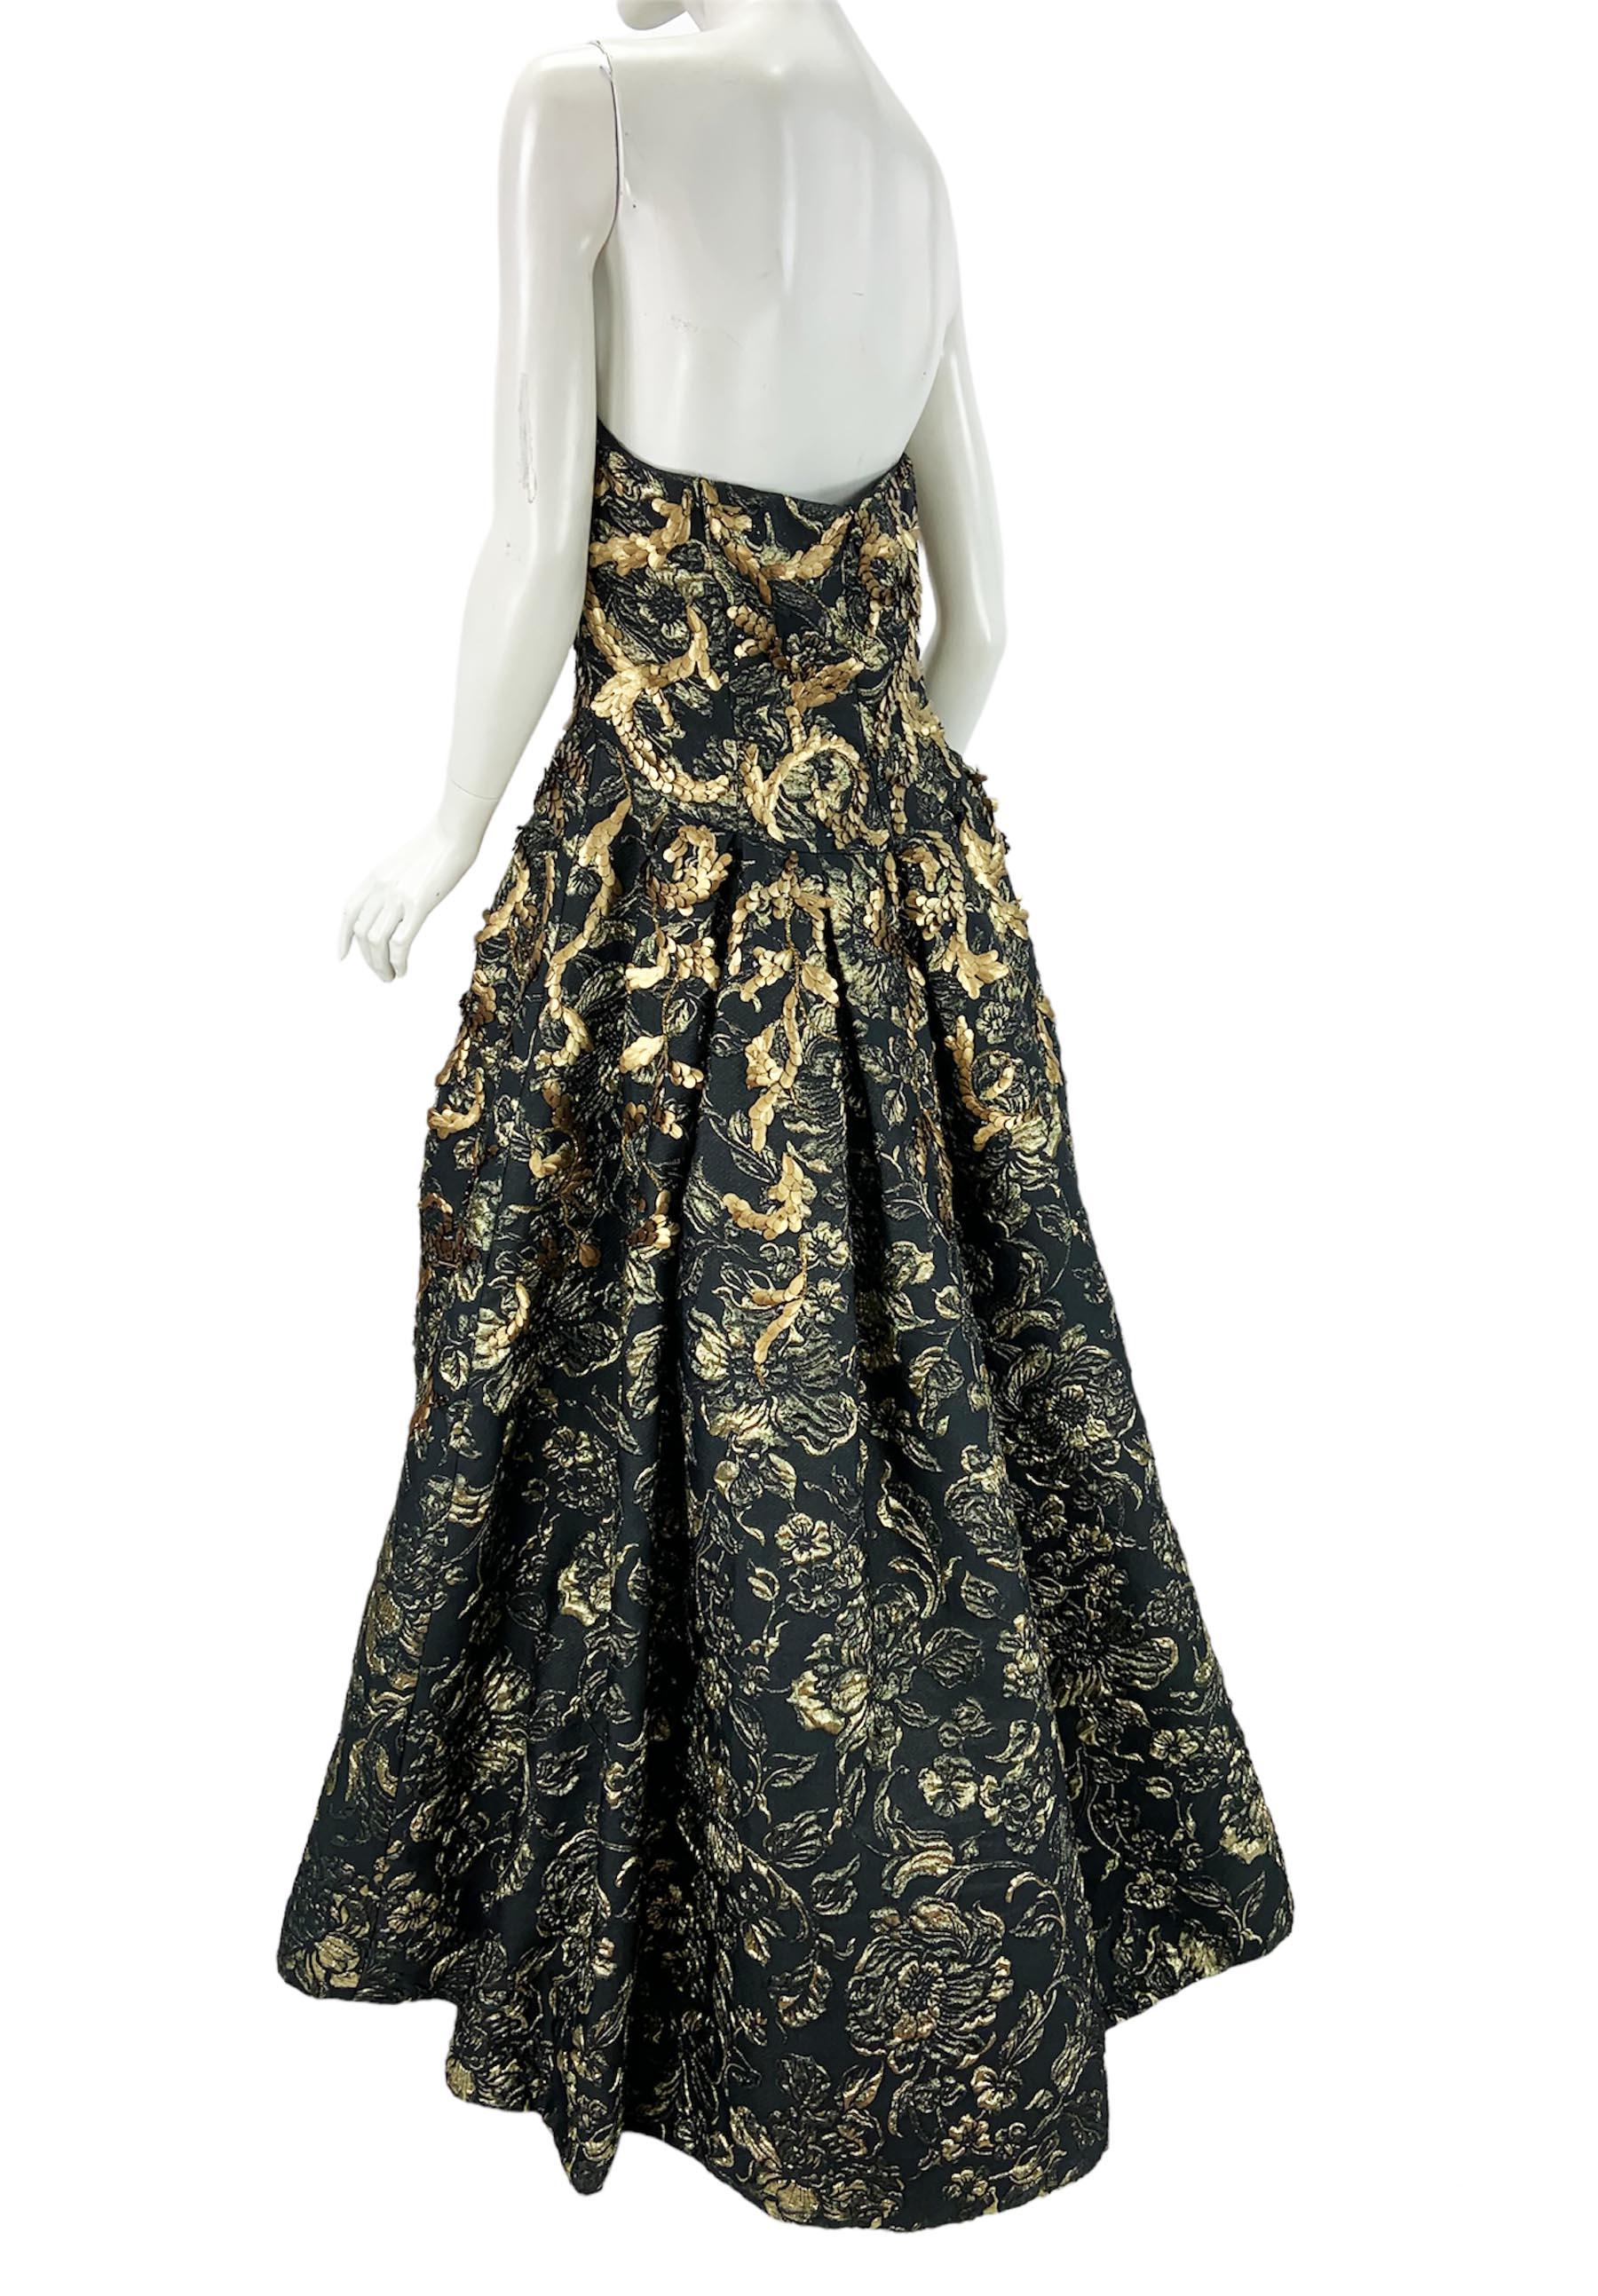 Oscar de la Renta H/W 2014 Laufsteg Museum Roter Teppich Schwarzes Goldkleid Kleid L / XL im Angebot 5